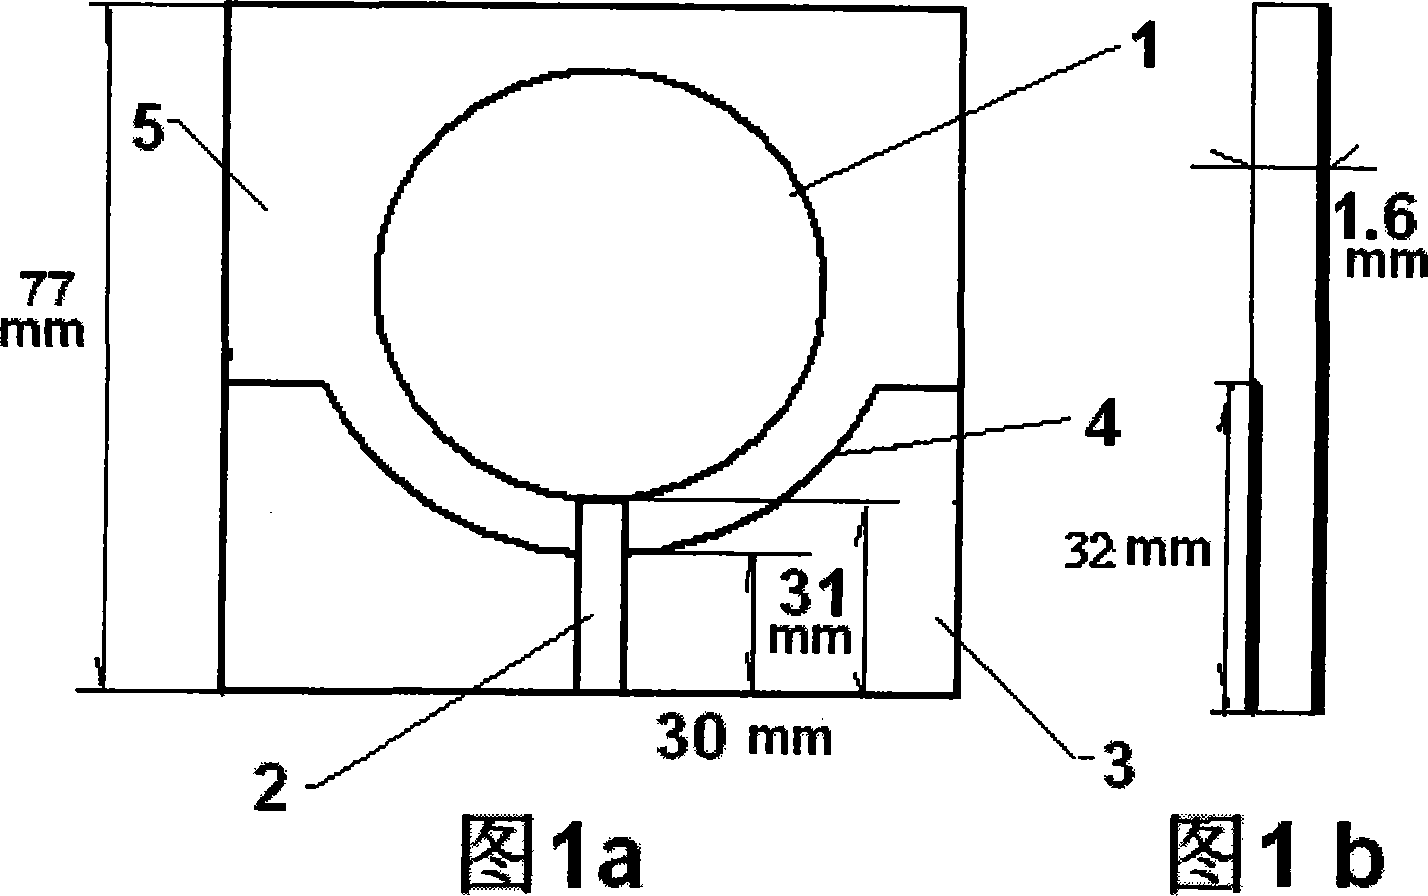 A floor-mounted curve groove type elliptic plane monopolar antenna